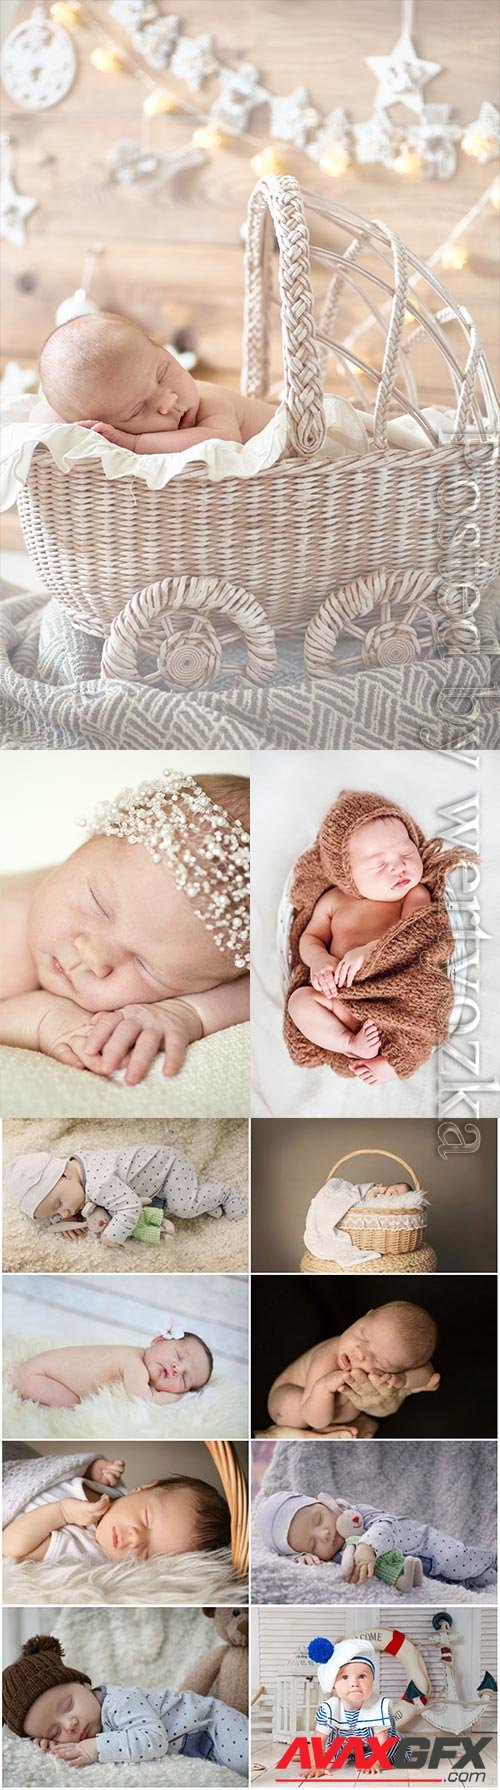 Adorable newborn babies stock photo